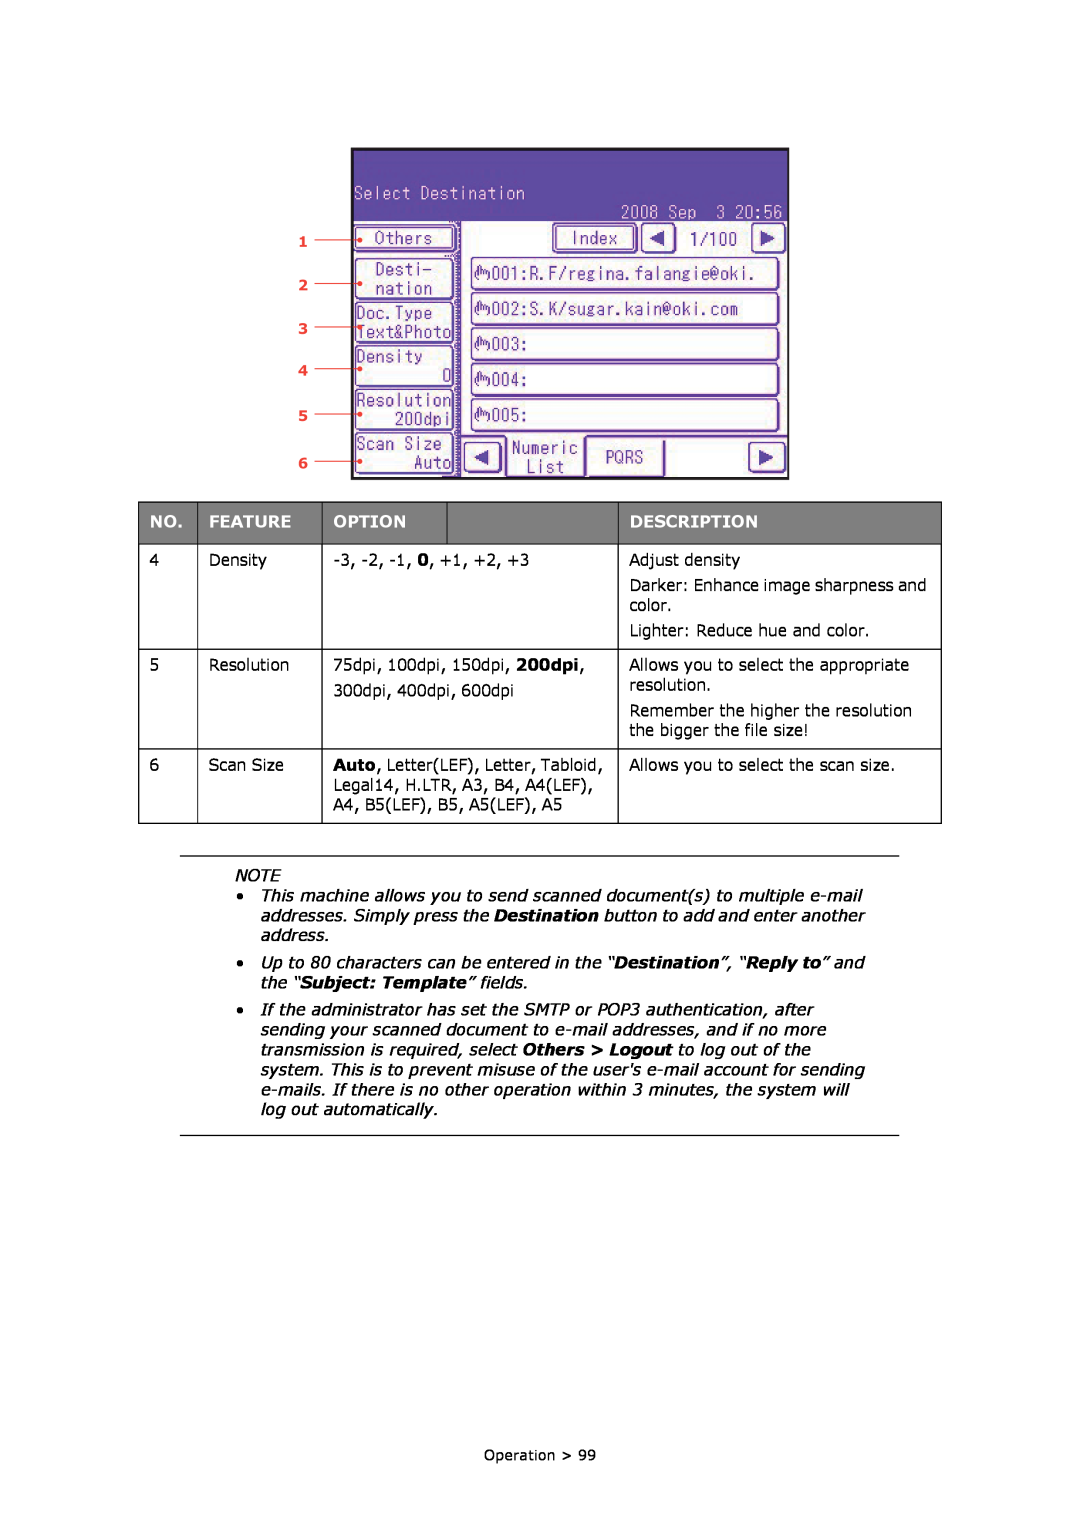 Oki MC860n MFP manual Feature, Option, Description 